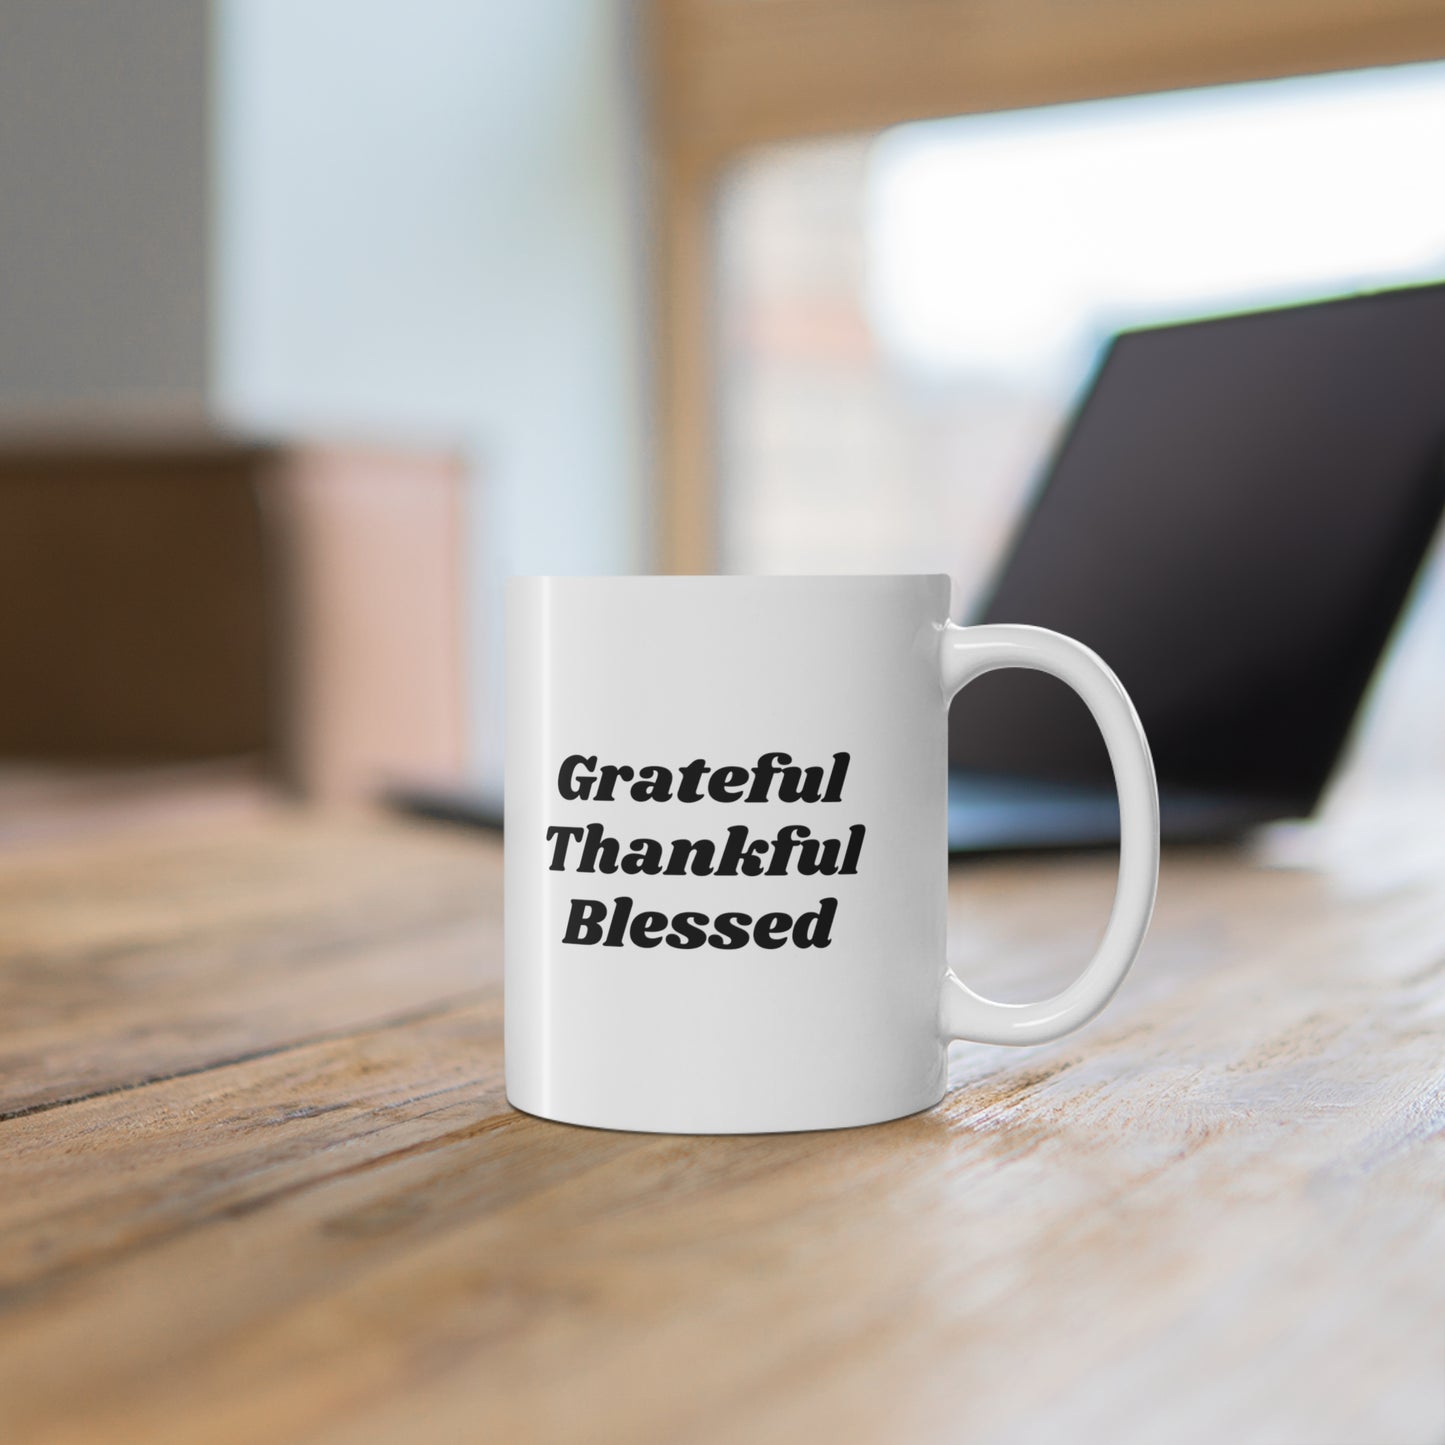 11oz ceramic mug with quote Grateful Thankful Blessed